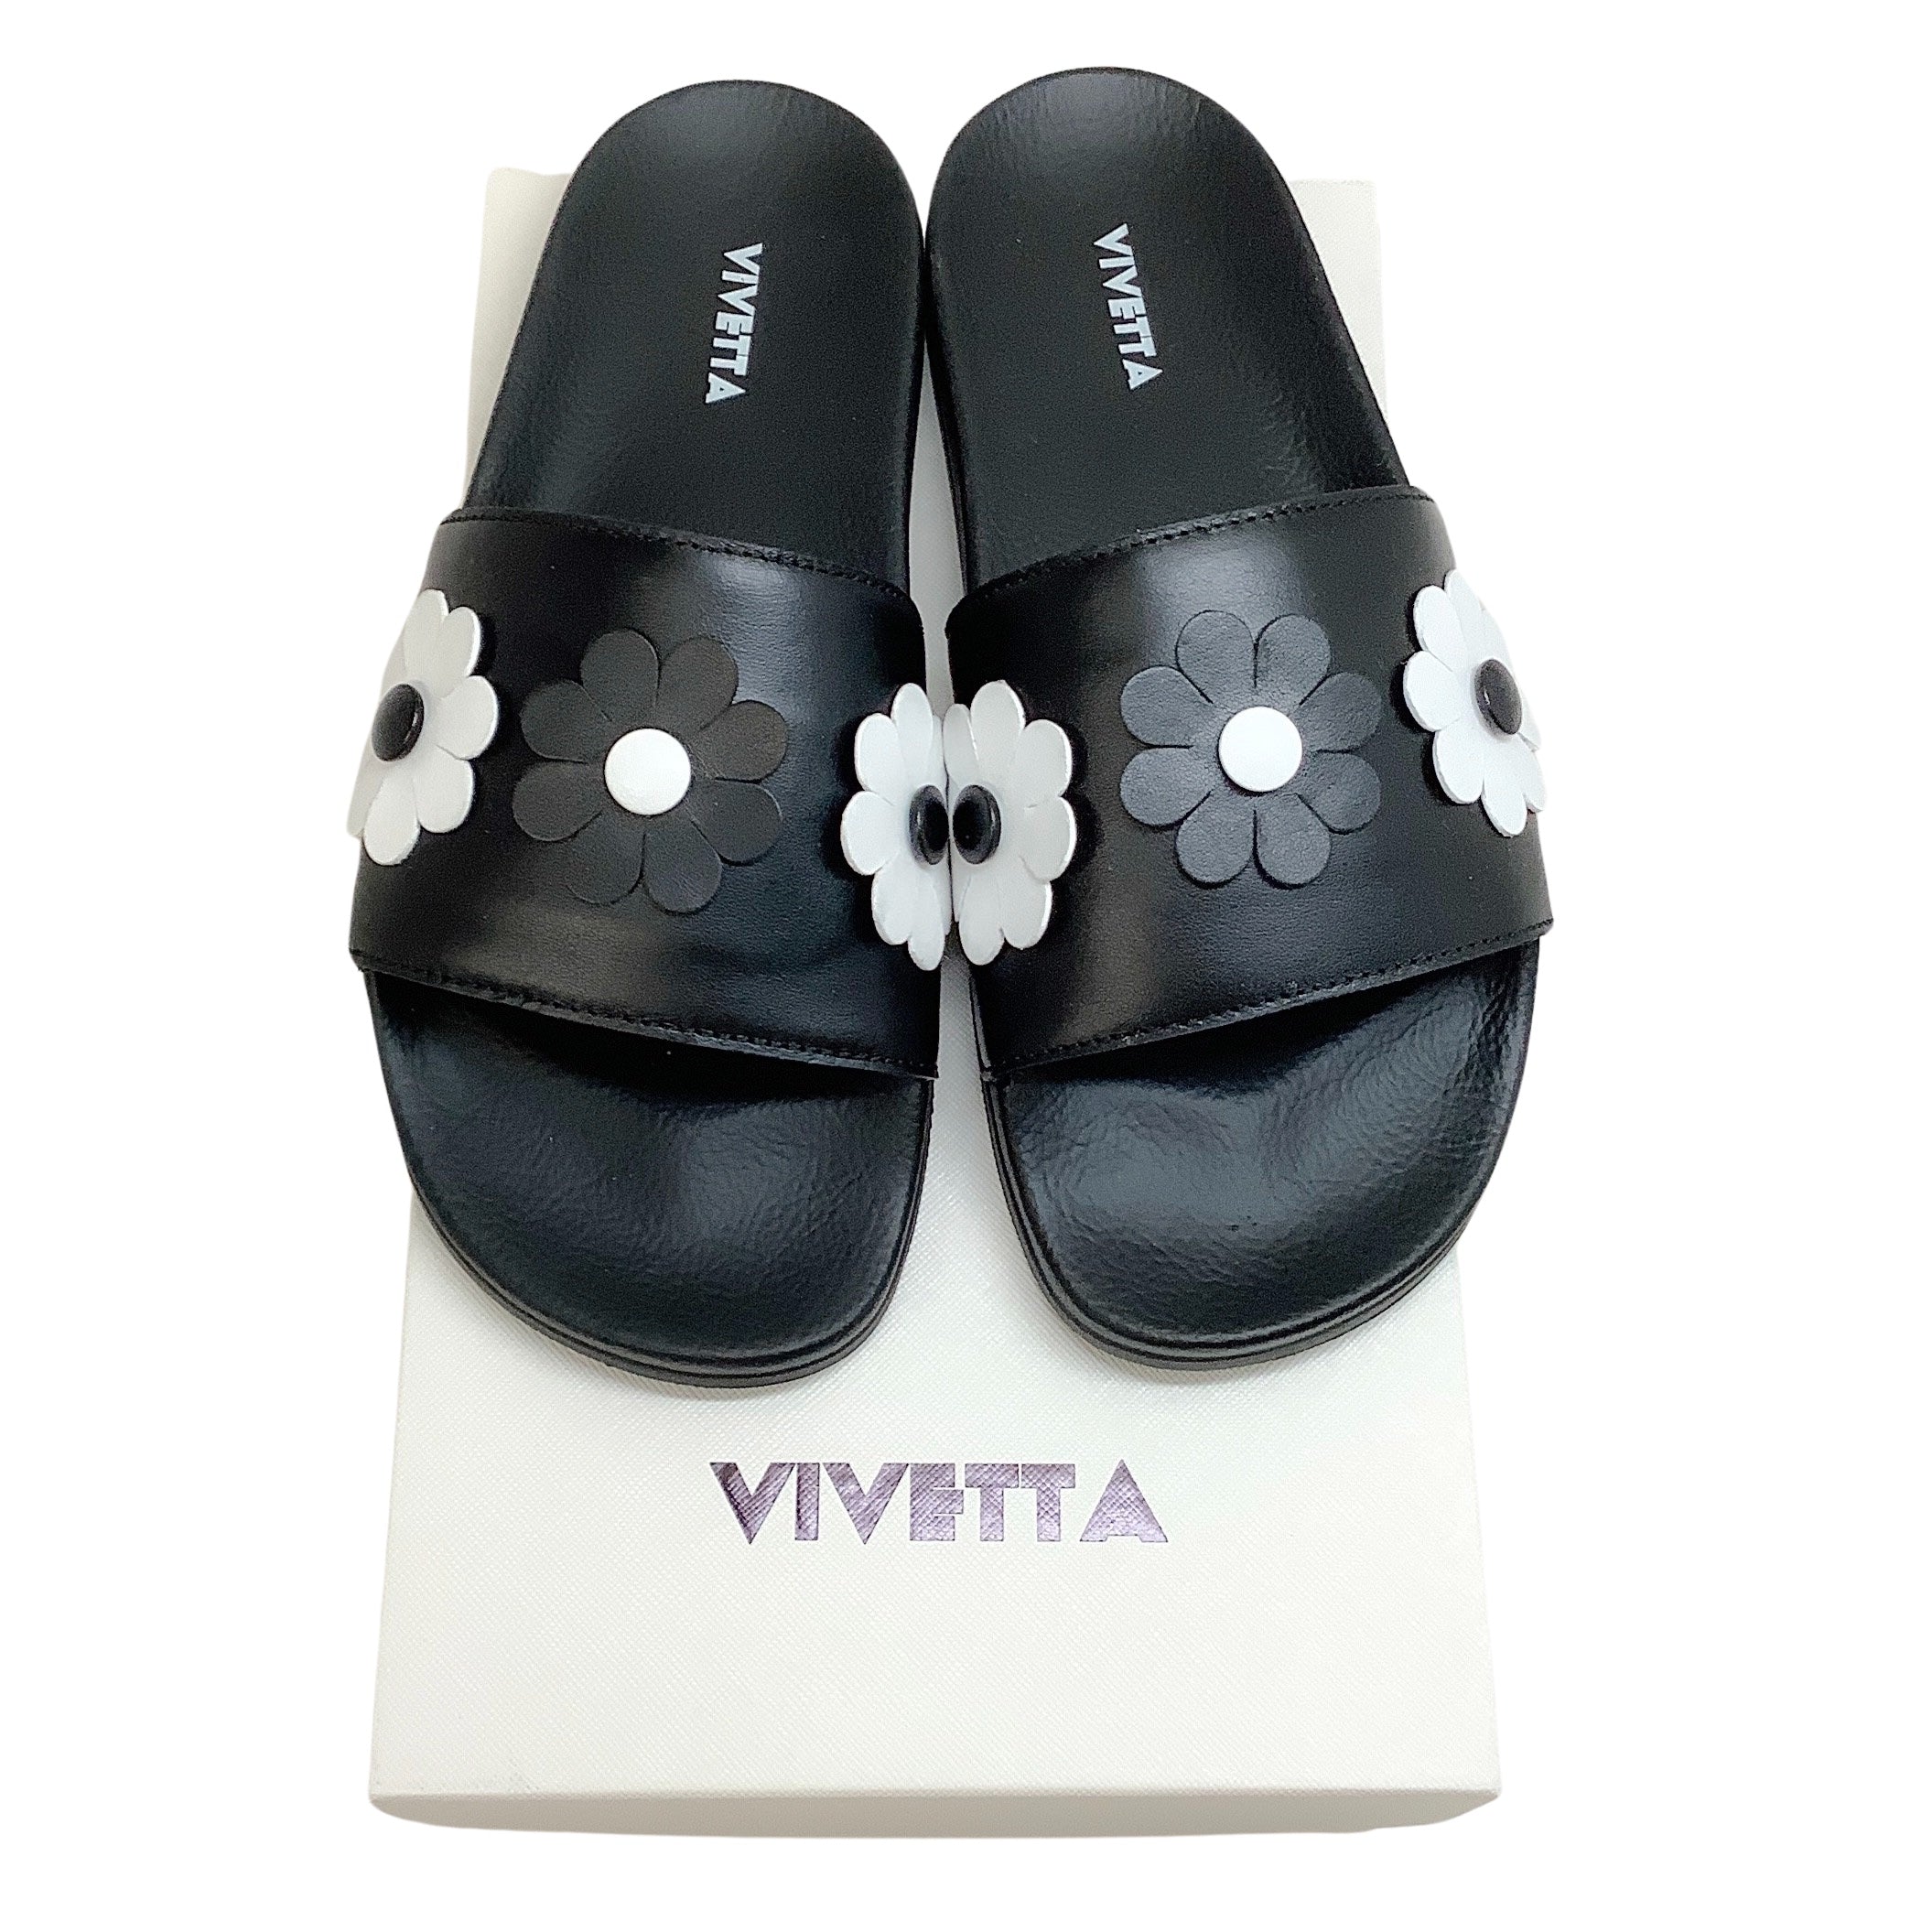 Vivetta Black Leather Slide Sandals with White Flowers